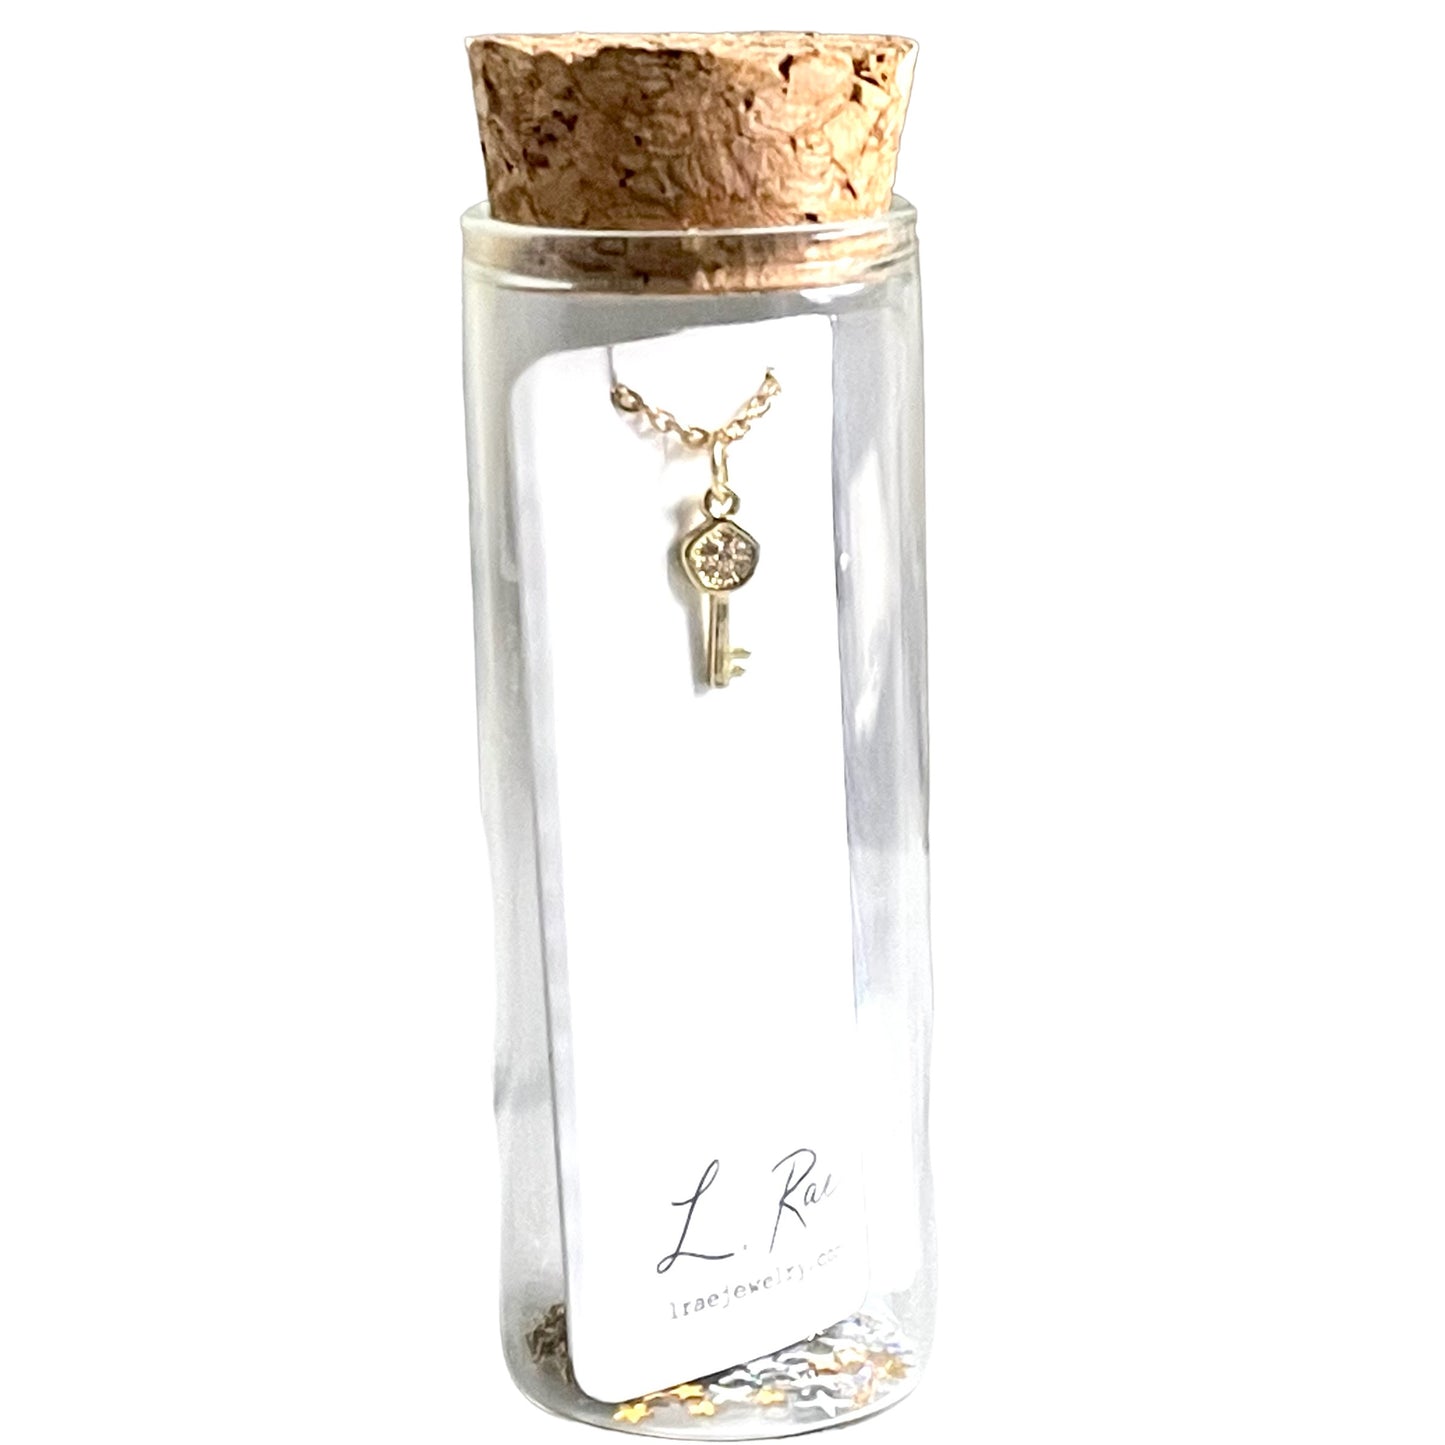 Tiny Pave Key Charm Necklace. Glass Vial Display